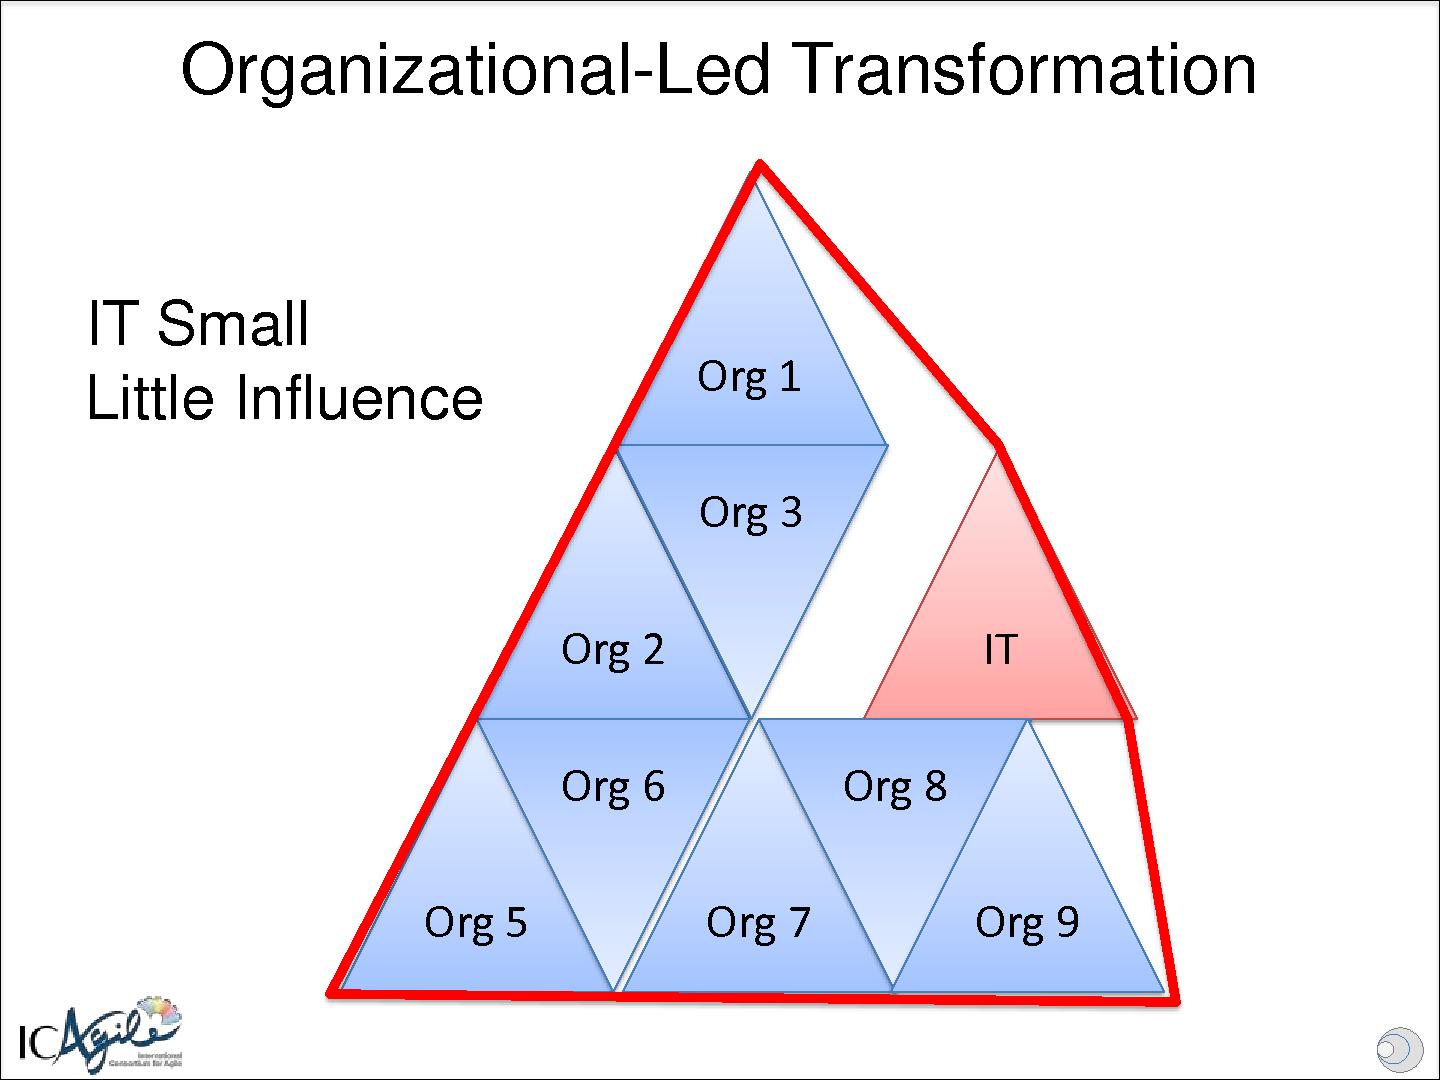 Файл:Using Keystone Habits to Transform Enterprises and Achieve Sustainable Organizational Agility (Ahmed Sidky, AgileDays-2014).pdf